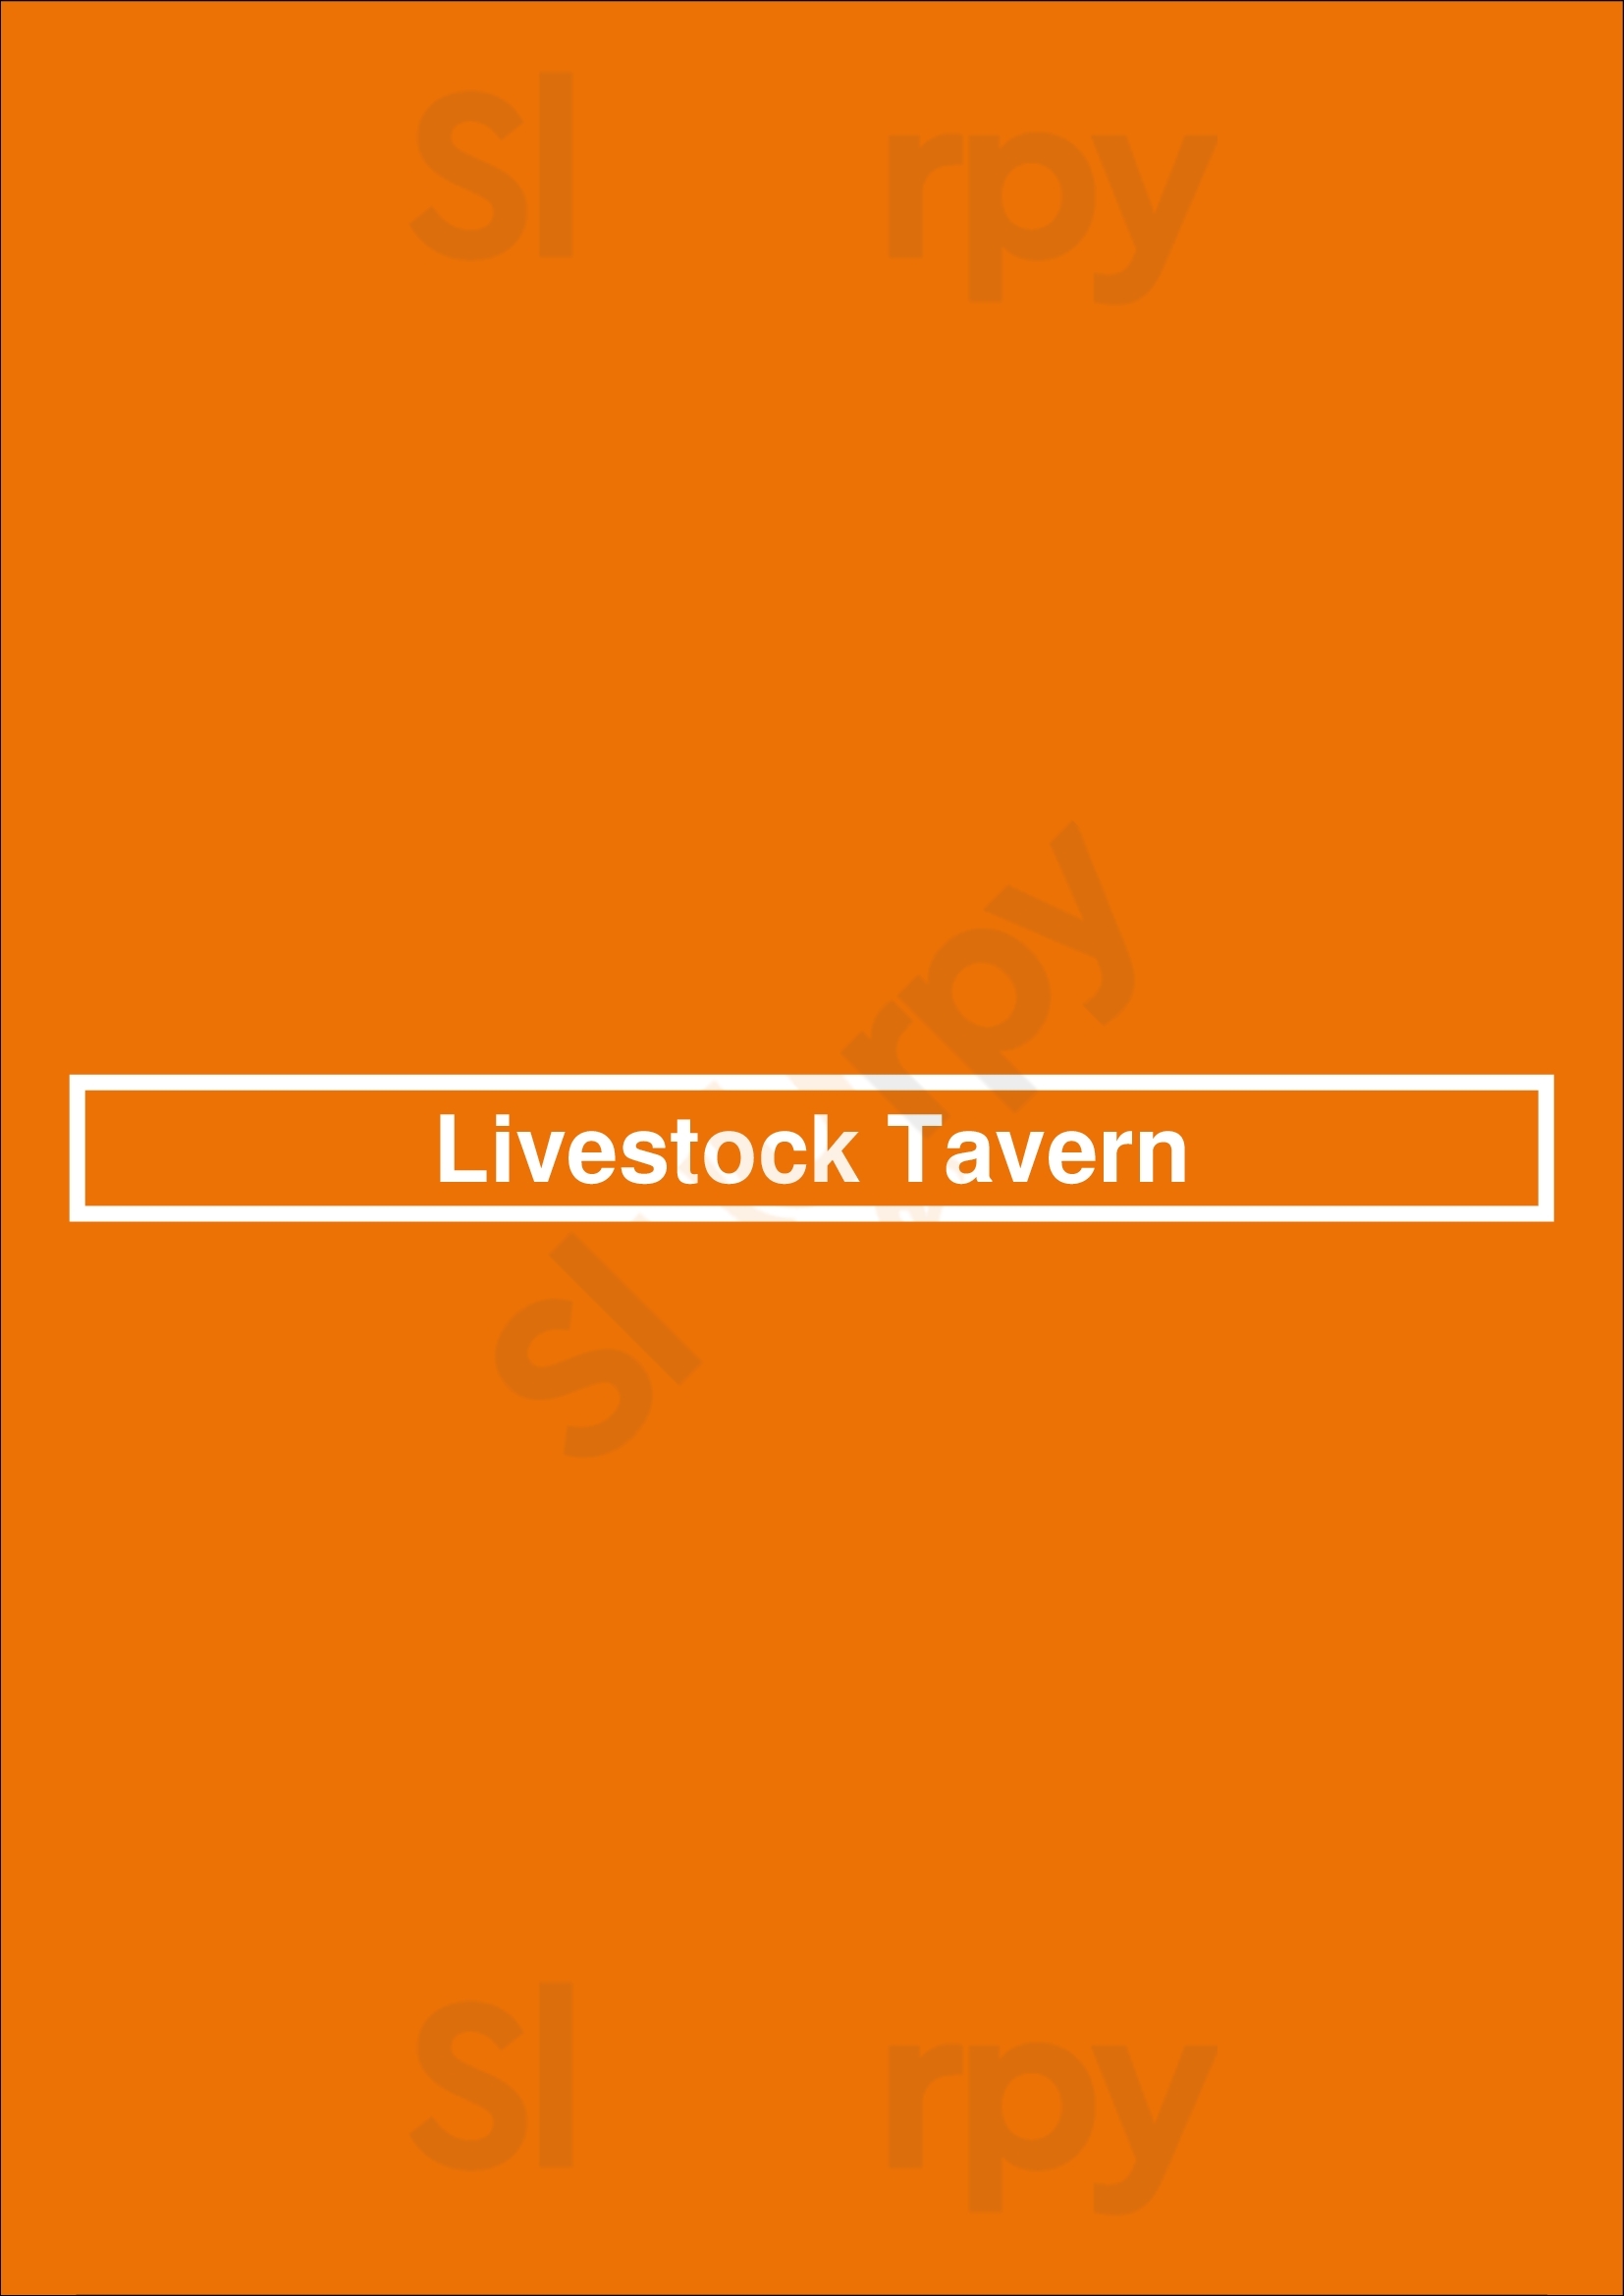 Livestock Tavern Honolulu Menu - 1